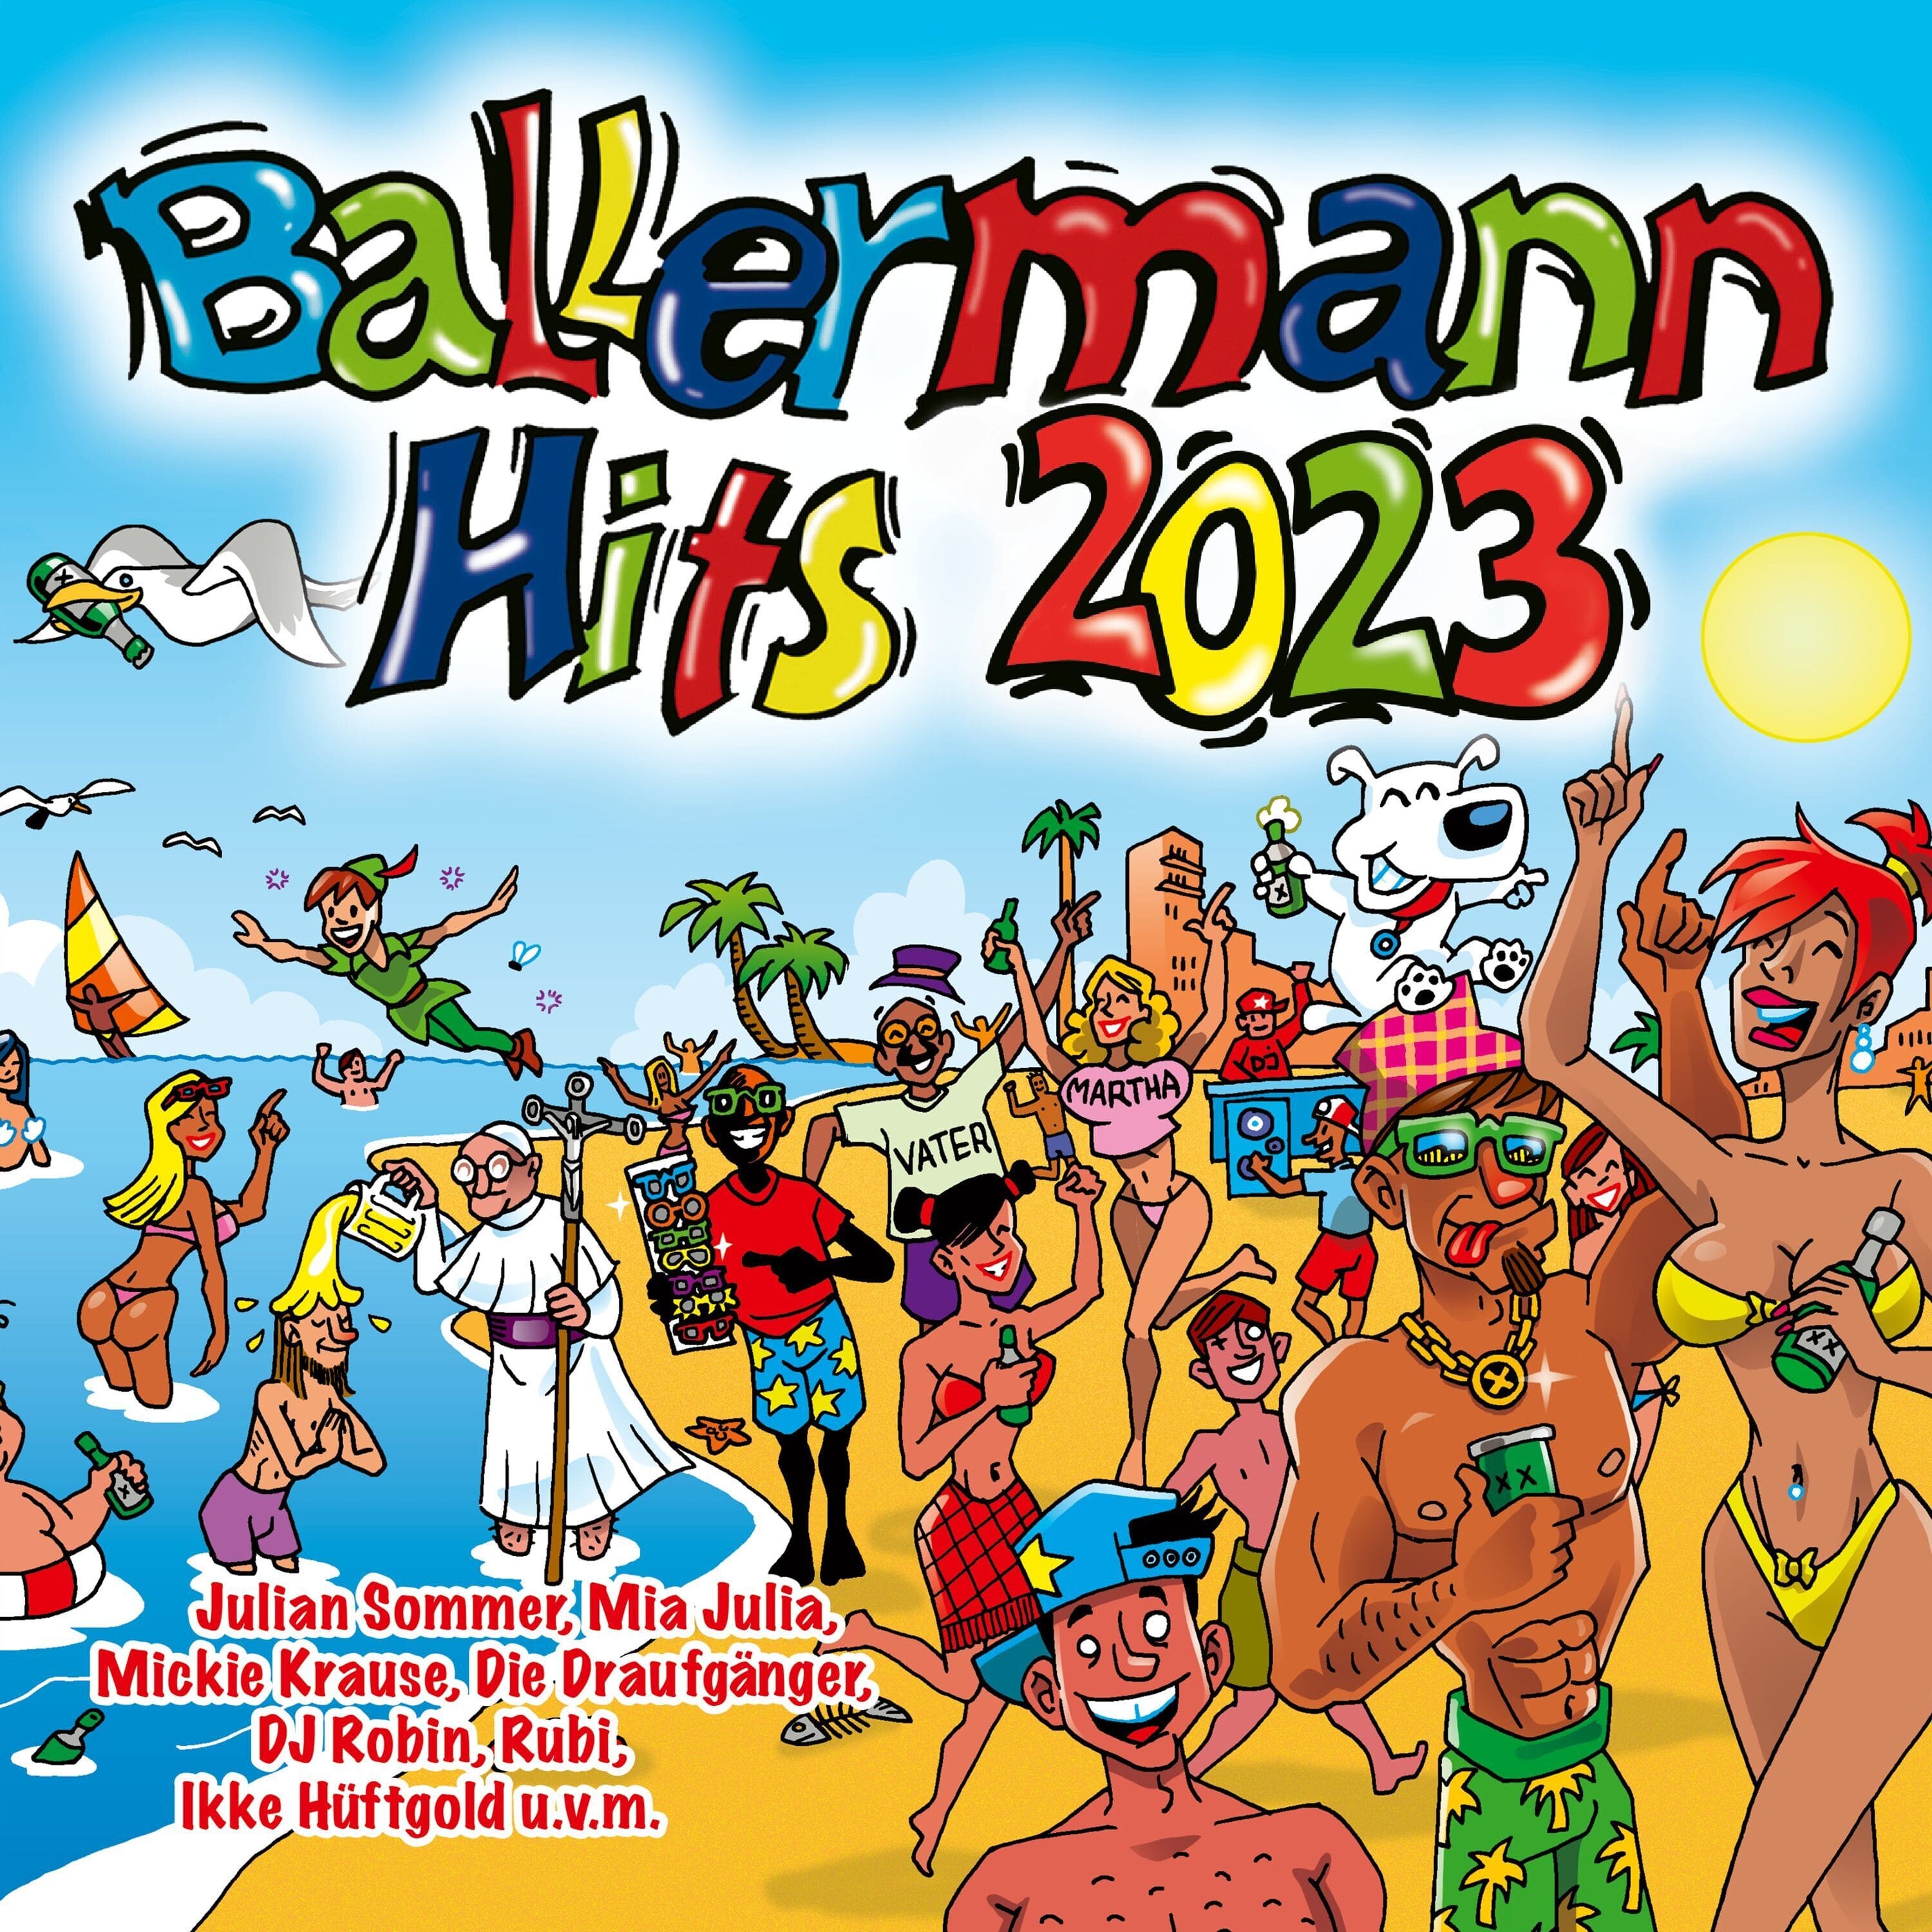 - - Artists 2CD 2023 Hits Ballermann Various Bravado -